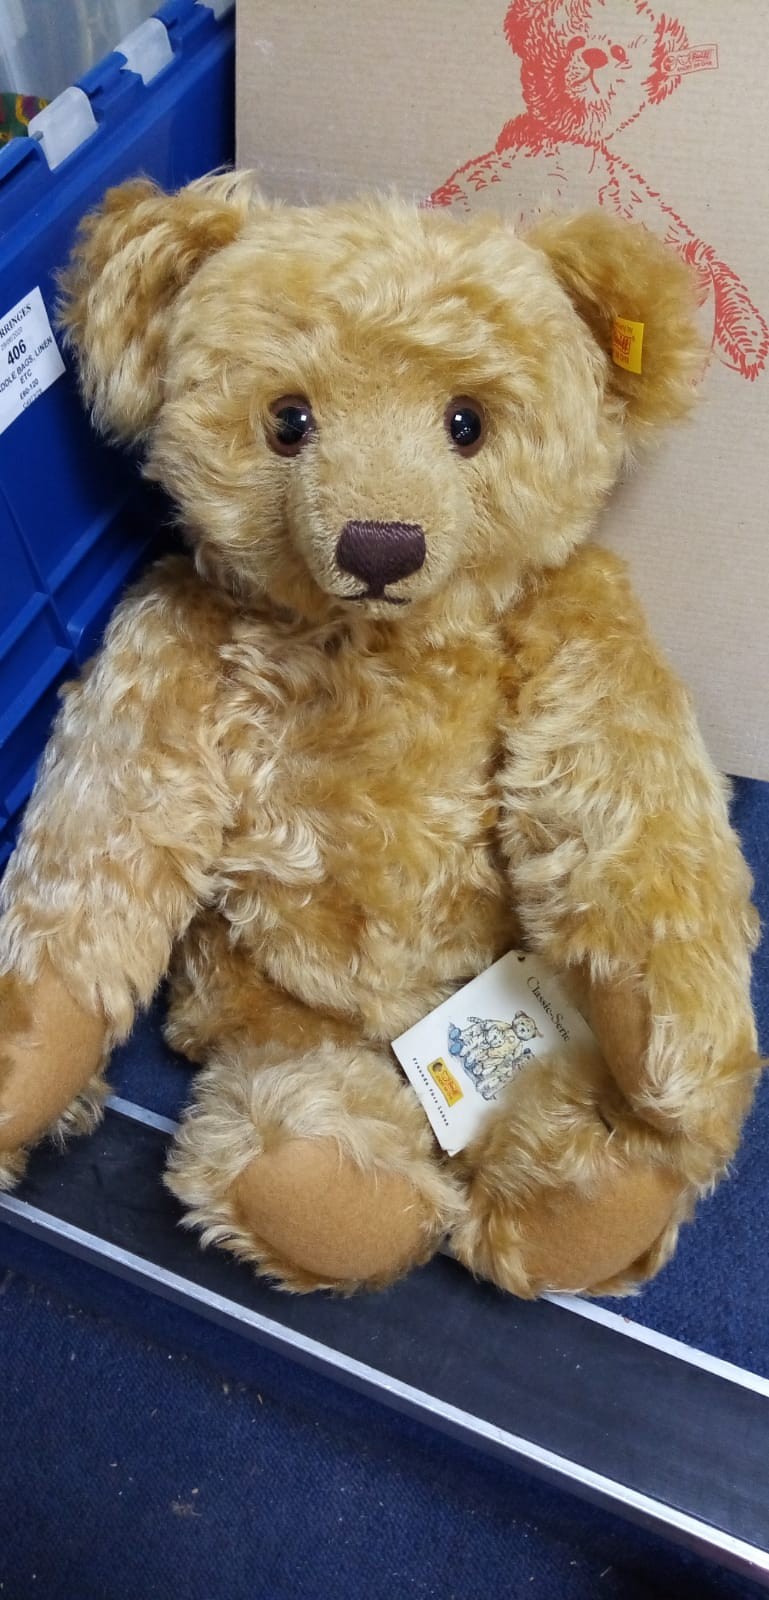 A Steiff teddy bear, yellow tag, boxed